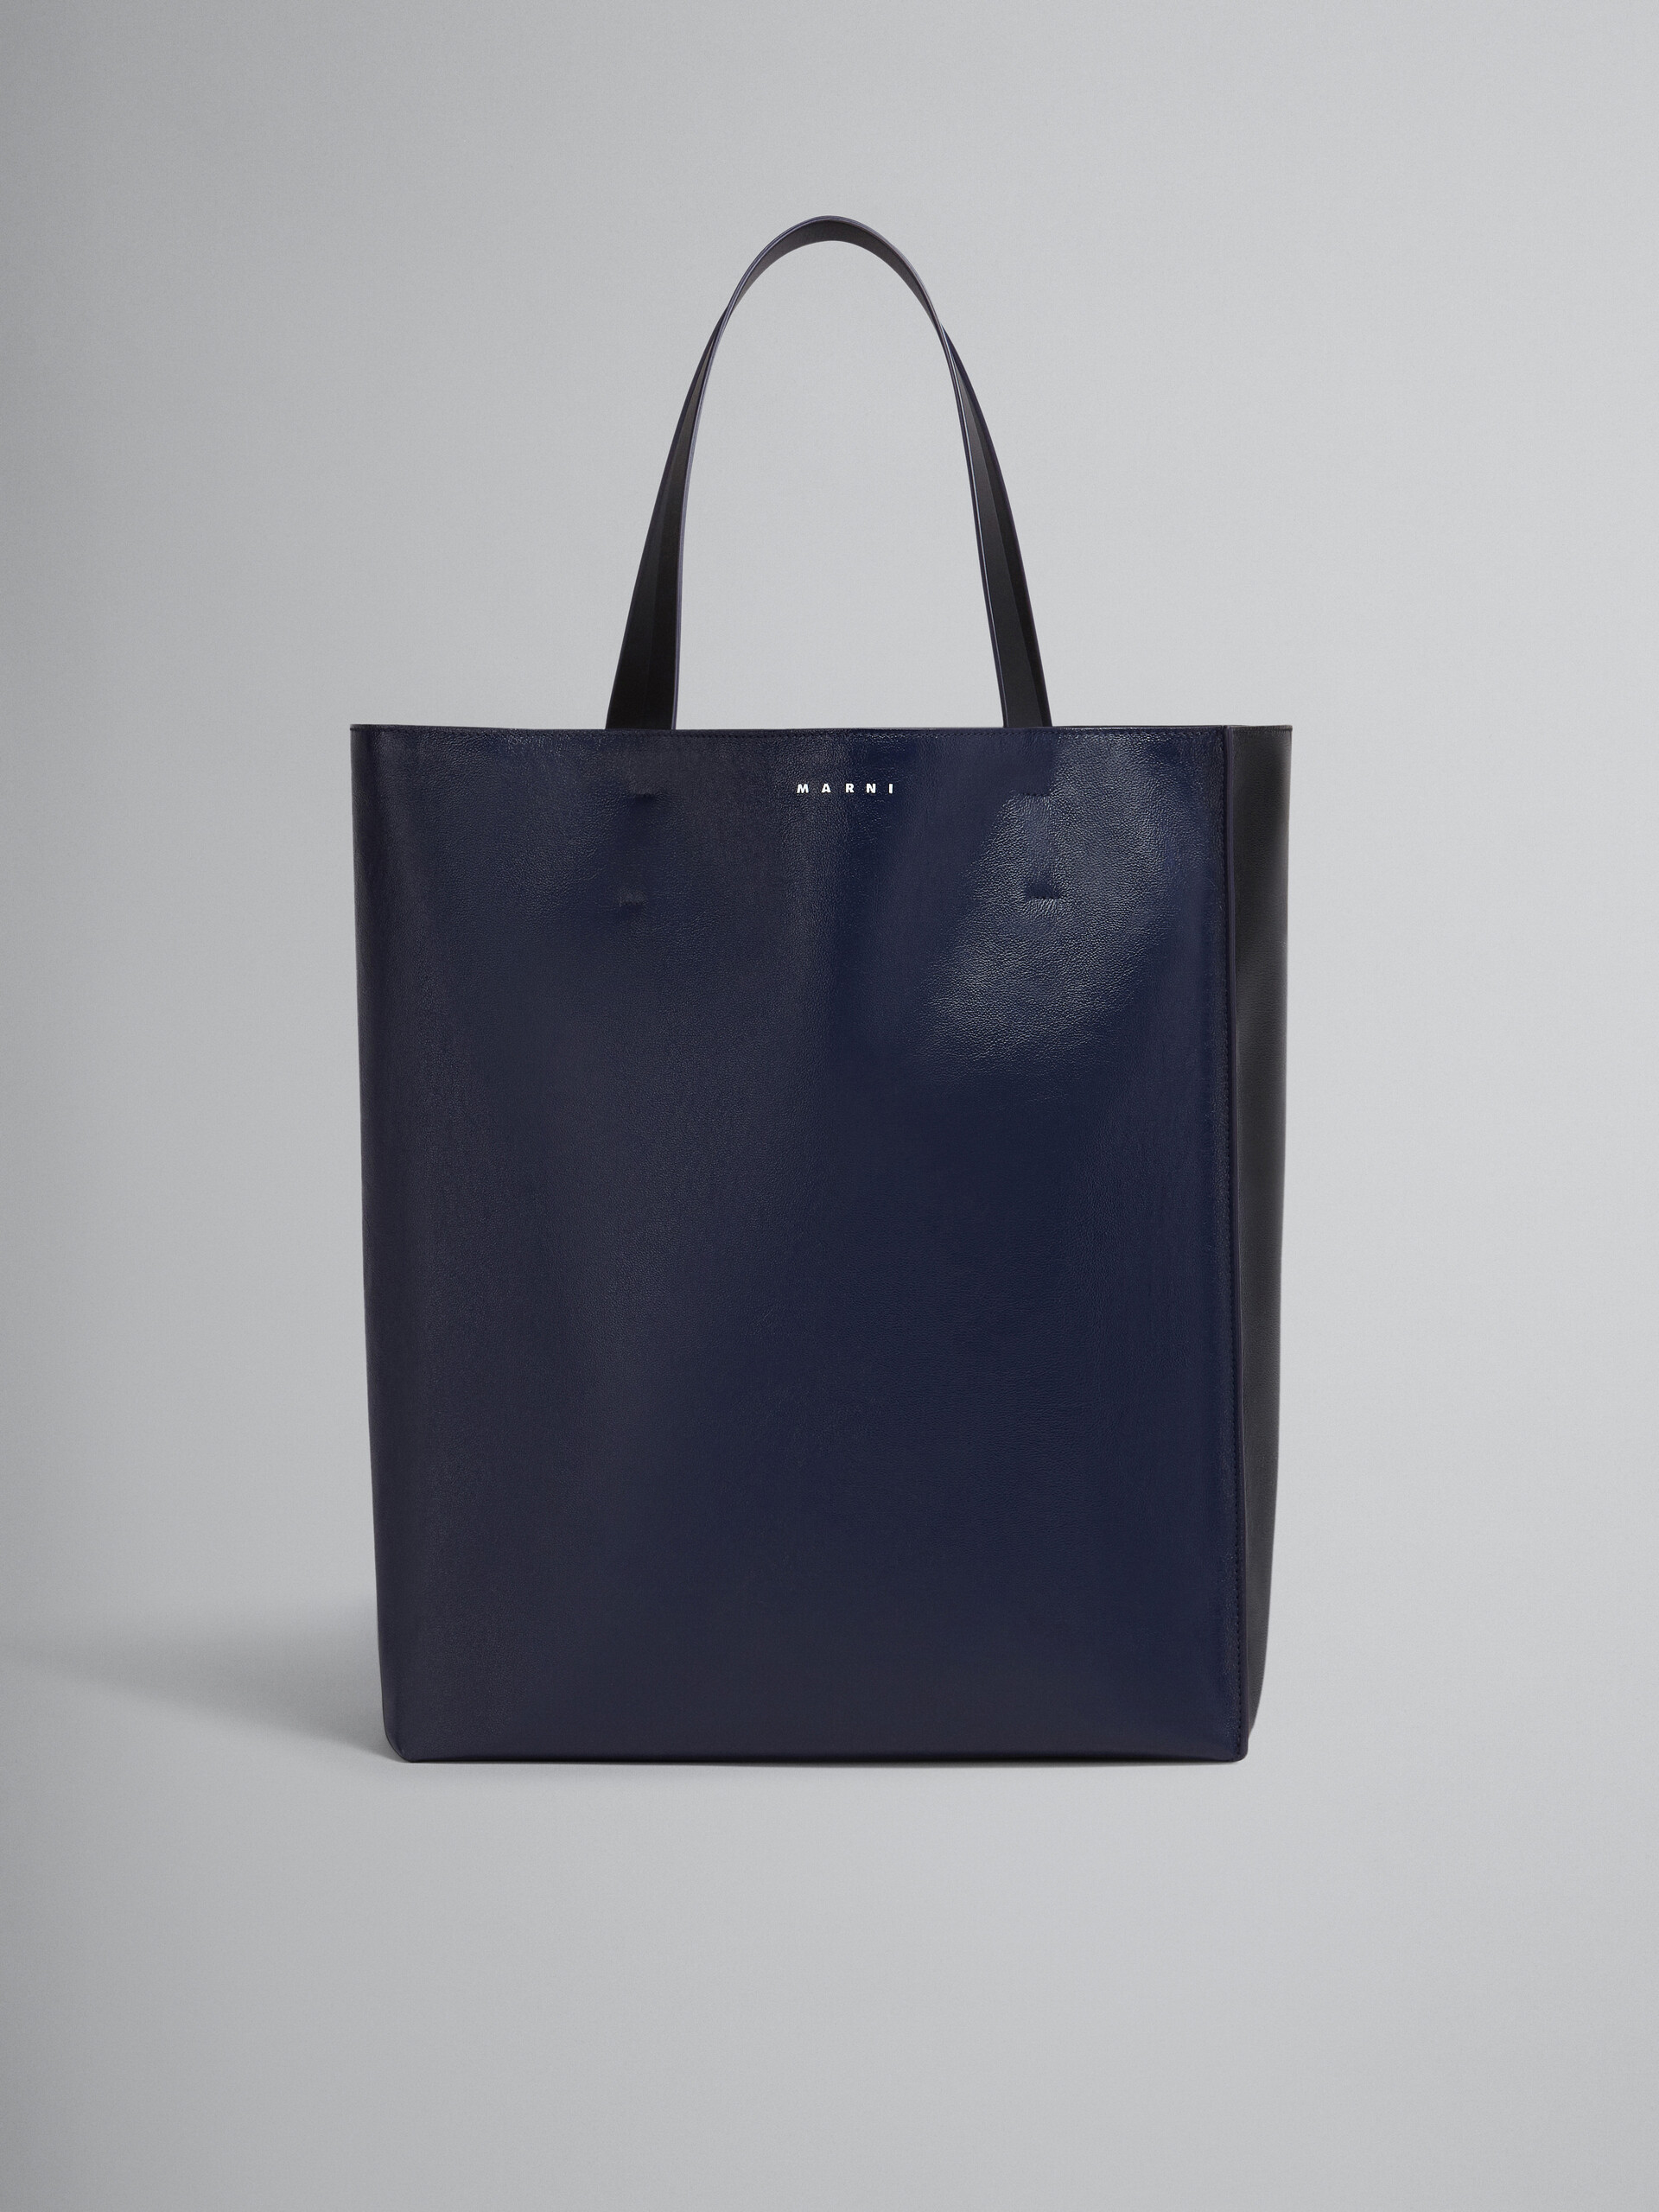 Museo Soft Bag Grande in pelle nera e blu - Borse shopping - Image 1